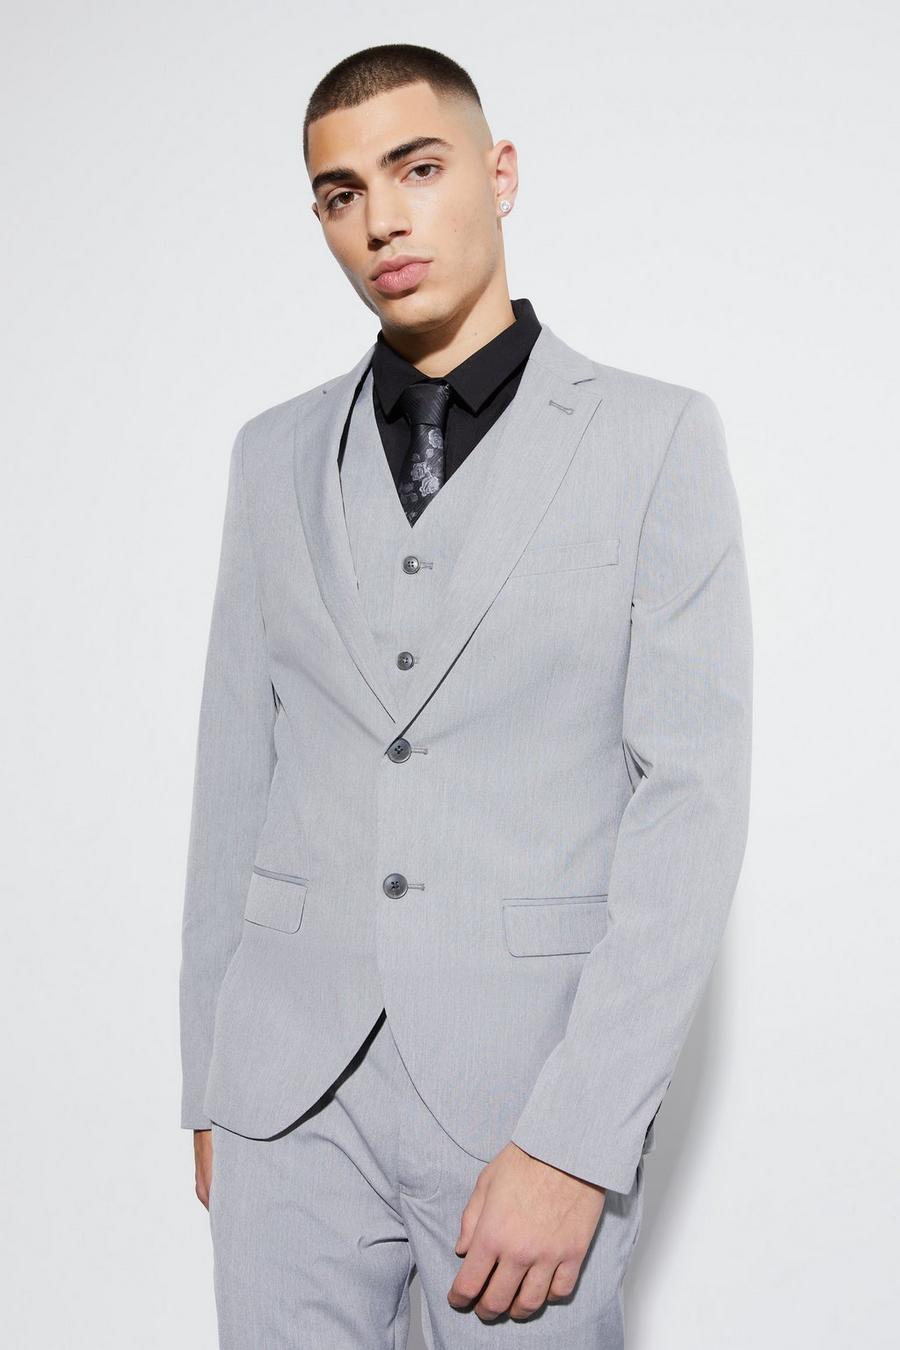 Grey grigio ז'קט חליפה בגזרת סופר סקיני עם רכיסה בודדת